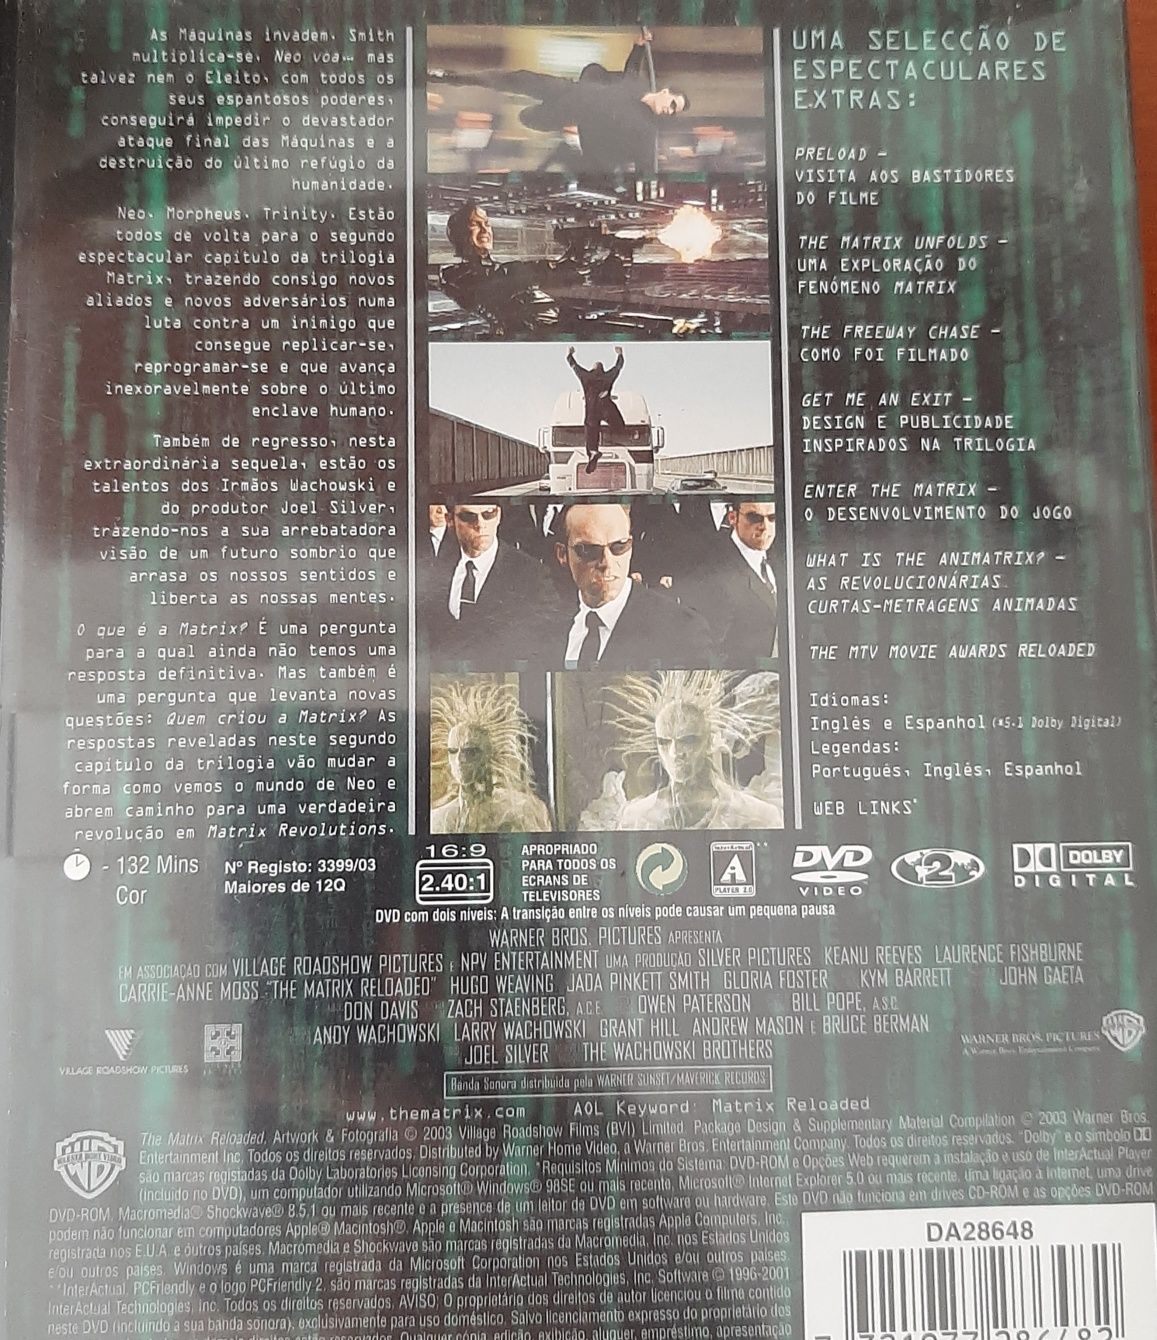 DVD "Matrix Reloaded"